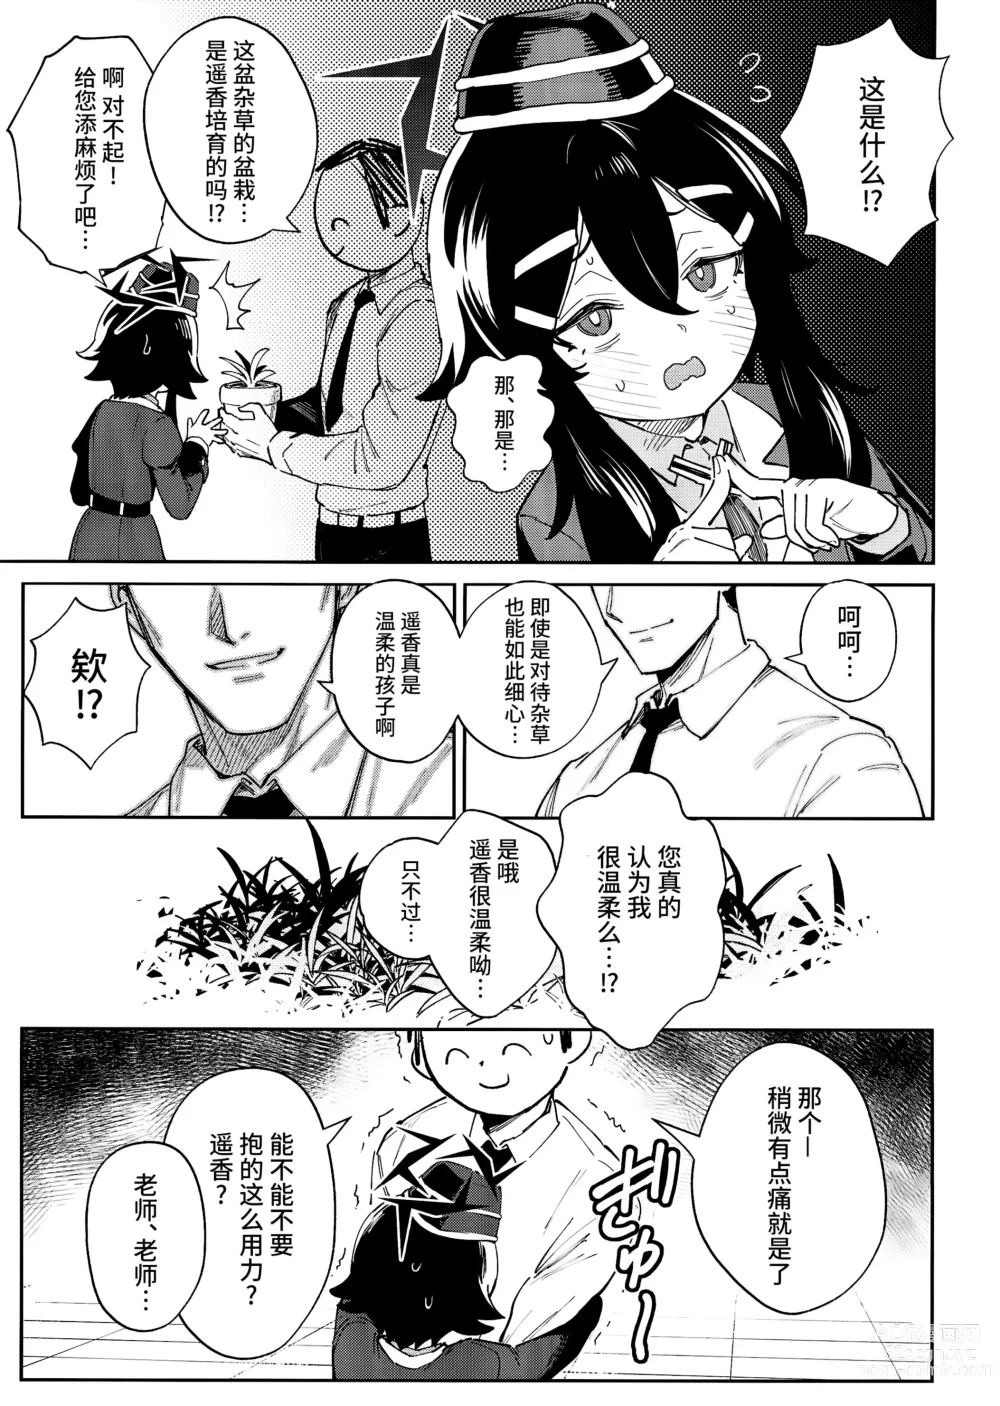 Page 8 of doujinshi 老师和学生的关系是这么开放的吗!?